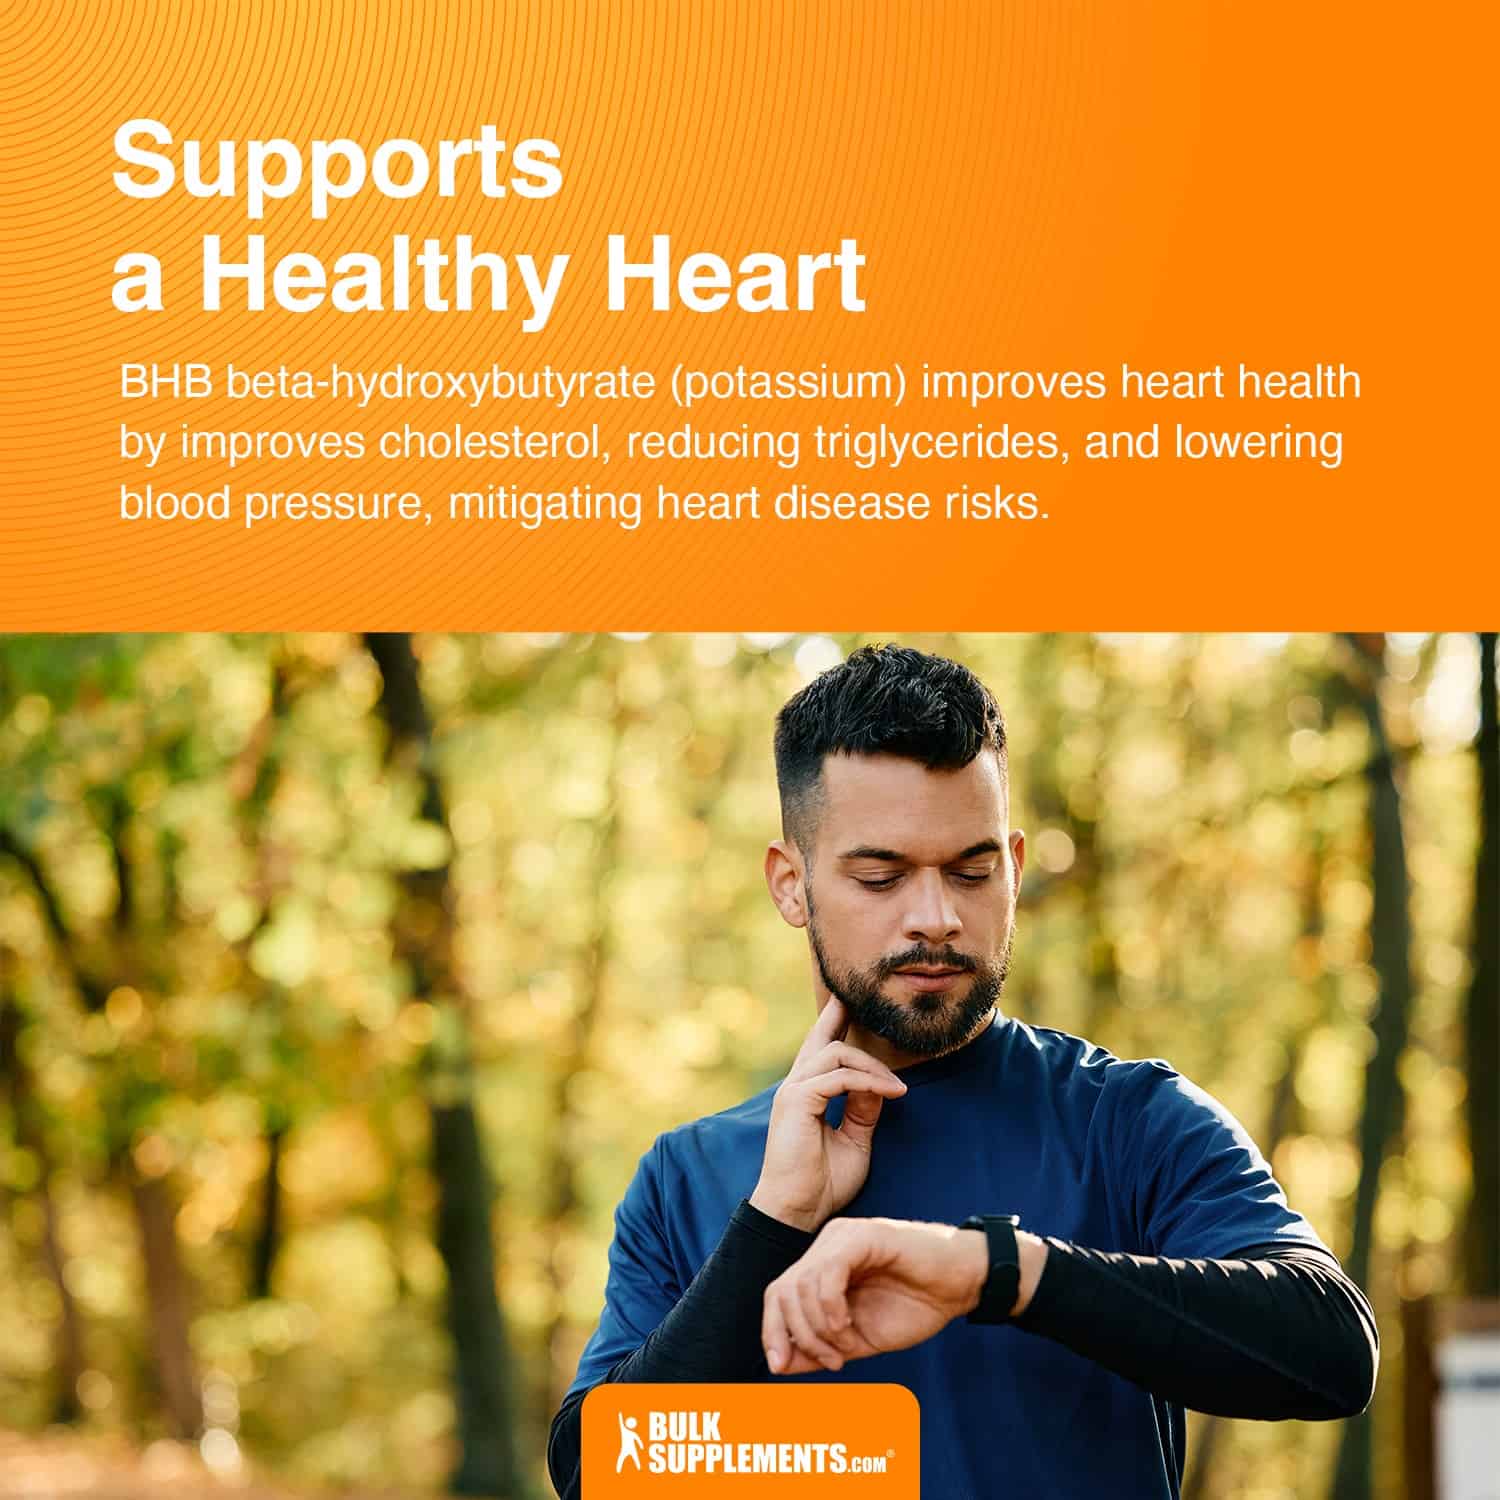 BHB (potassium) supports a healthy heart